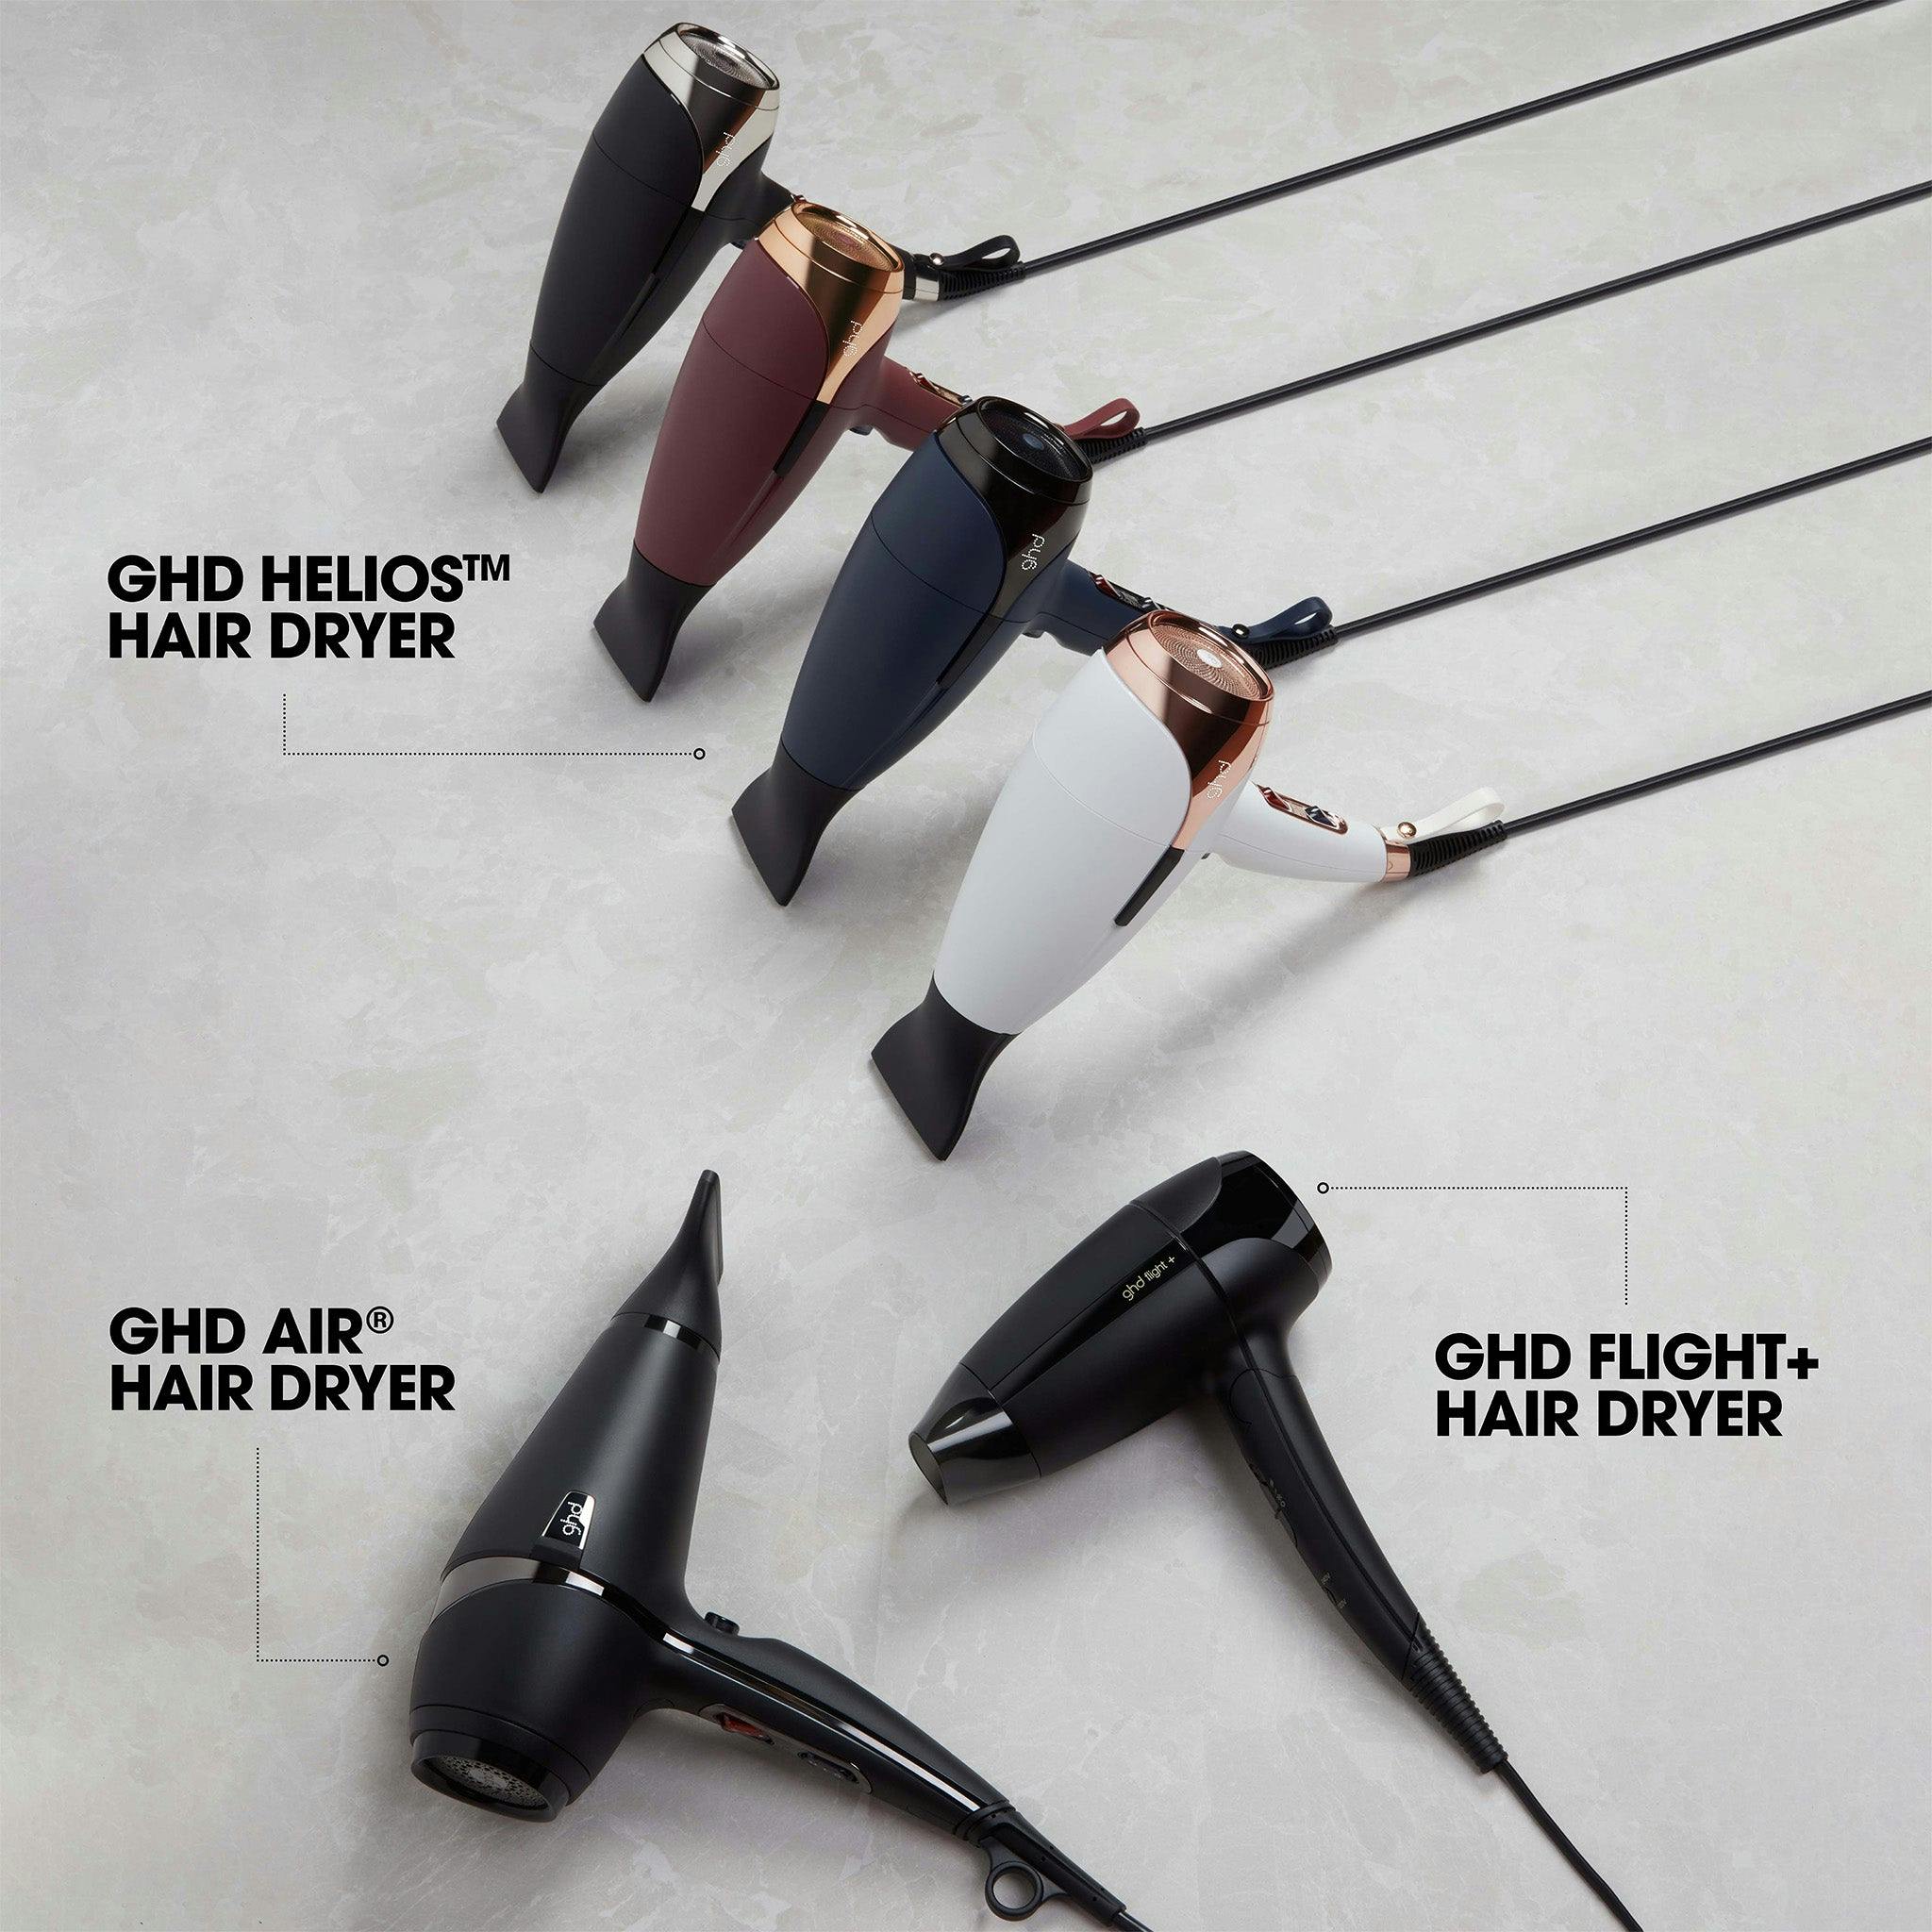 ghd Flight+ Travel Hair Dryer